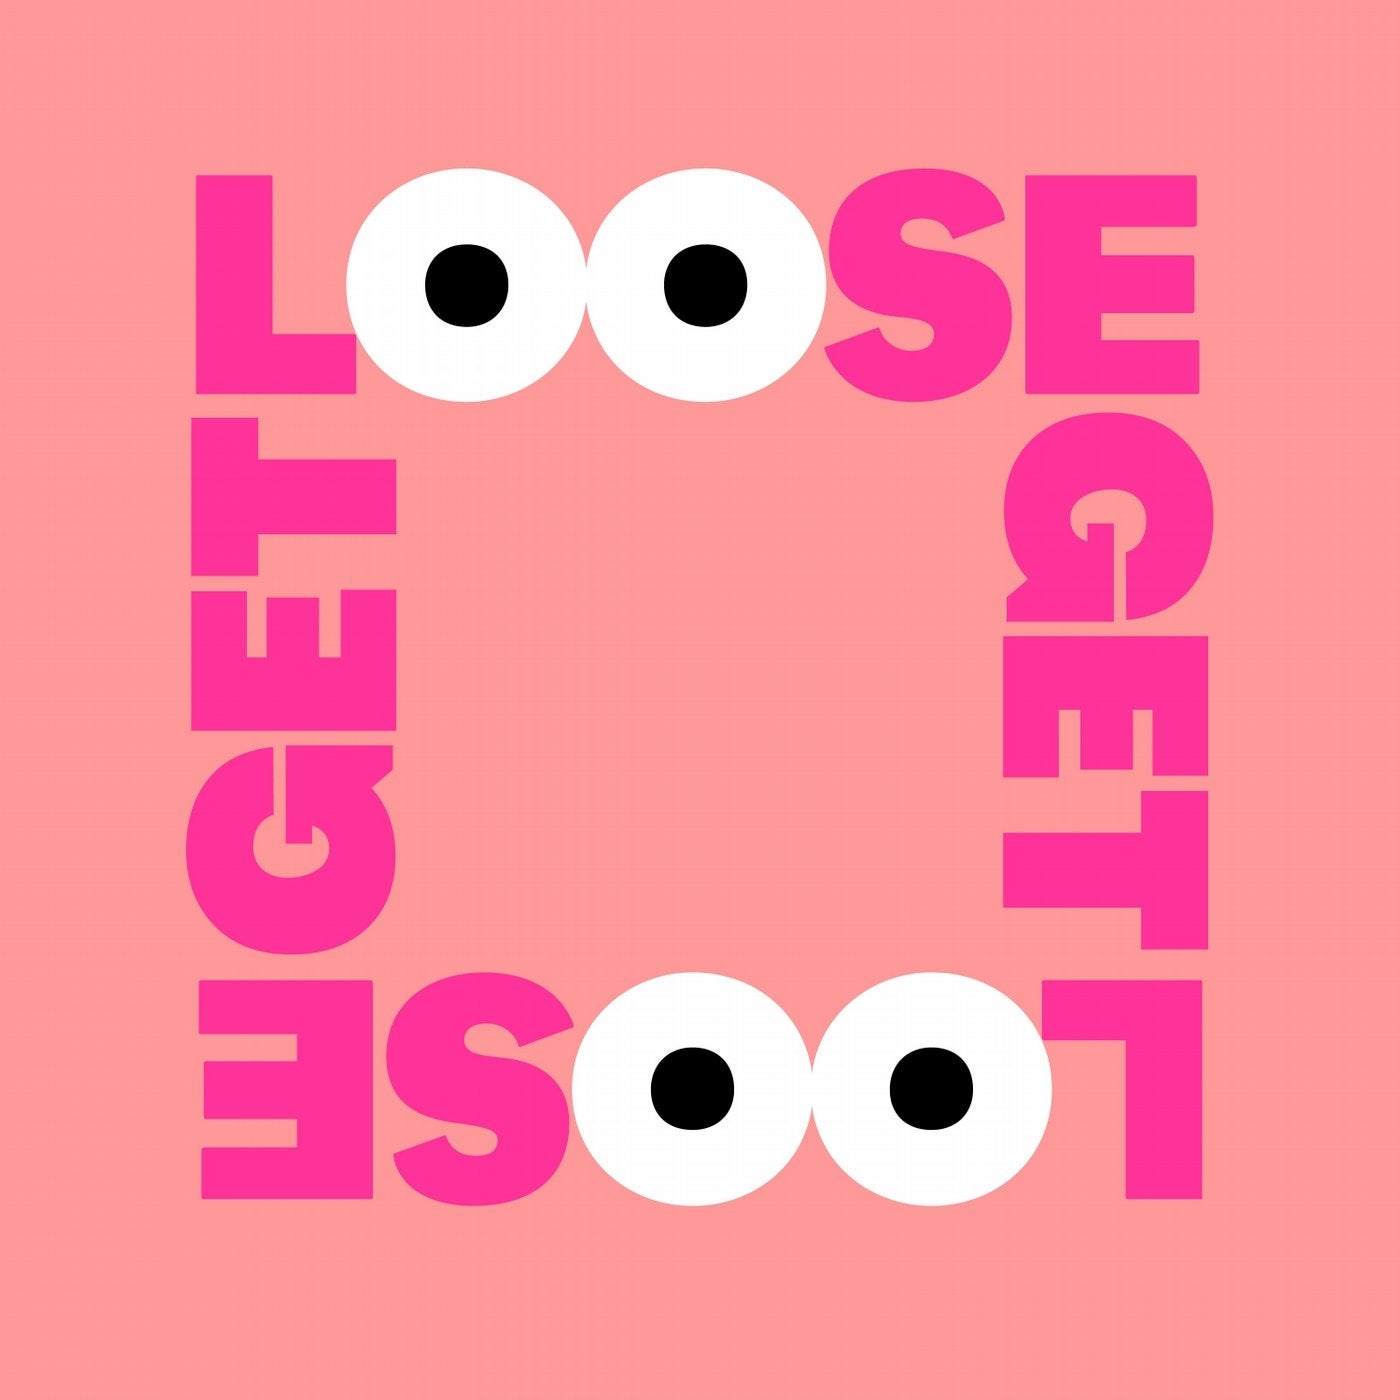 Get Loose